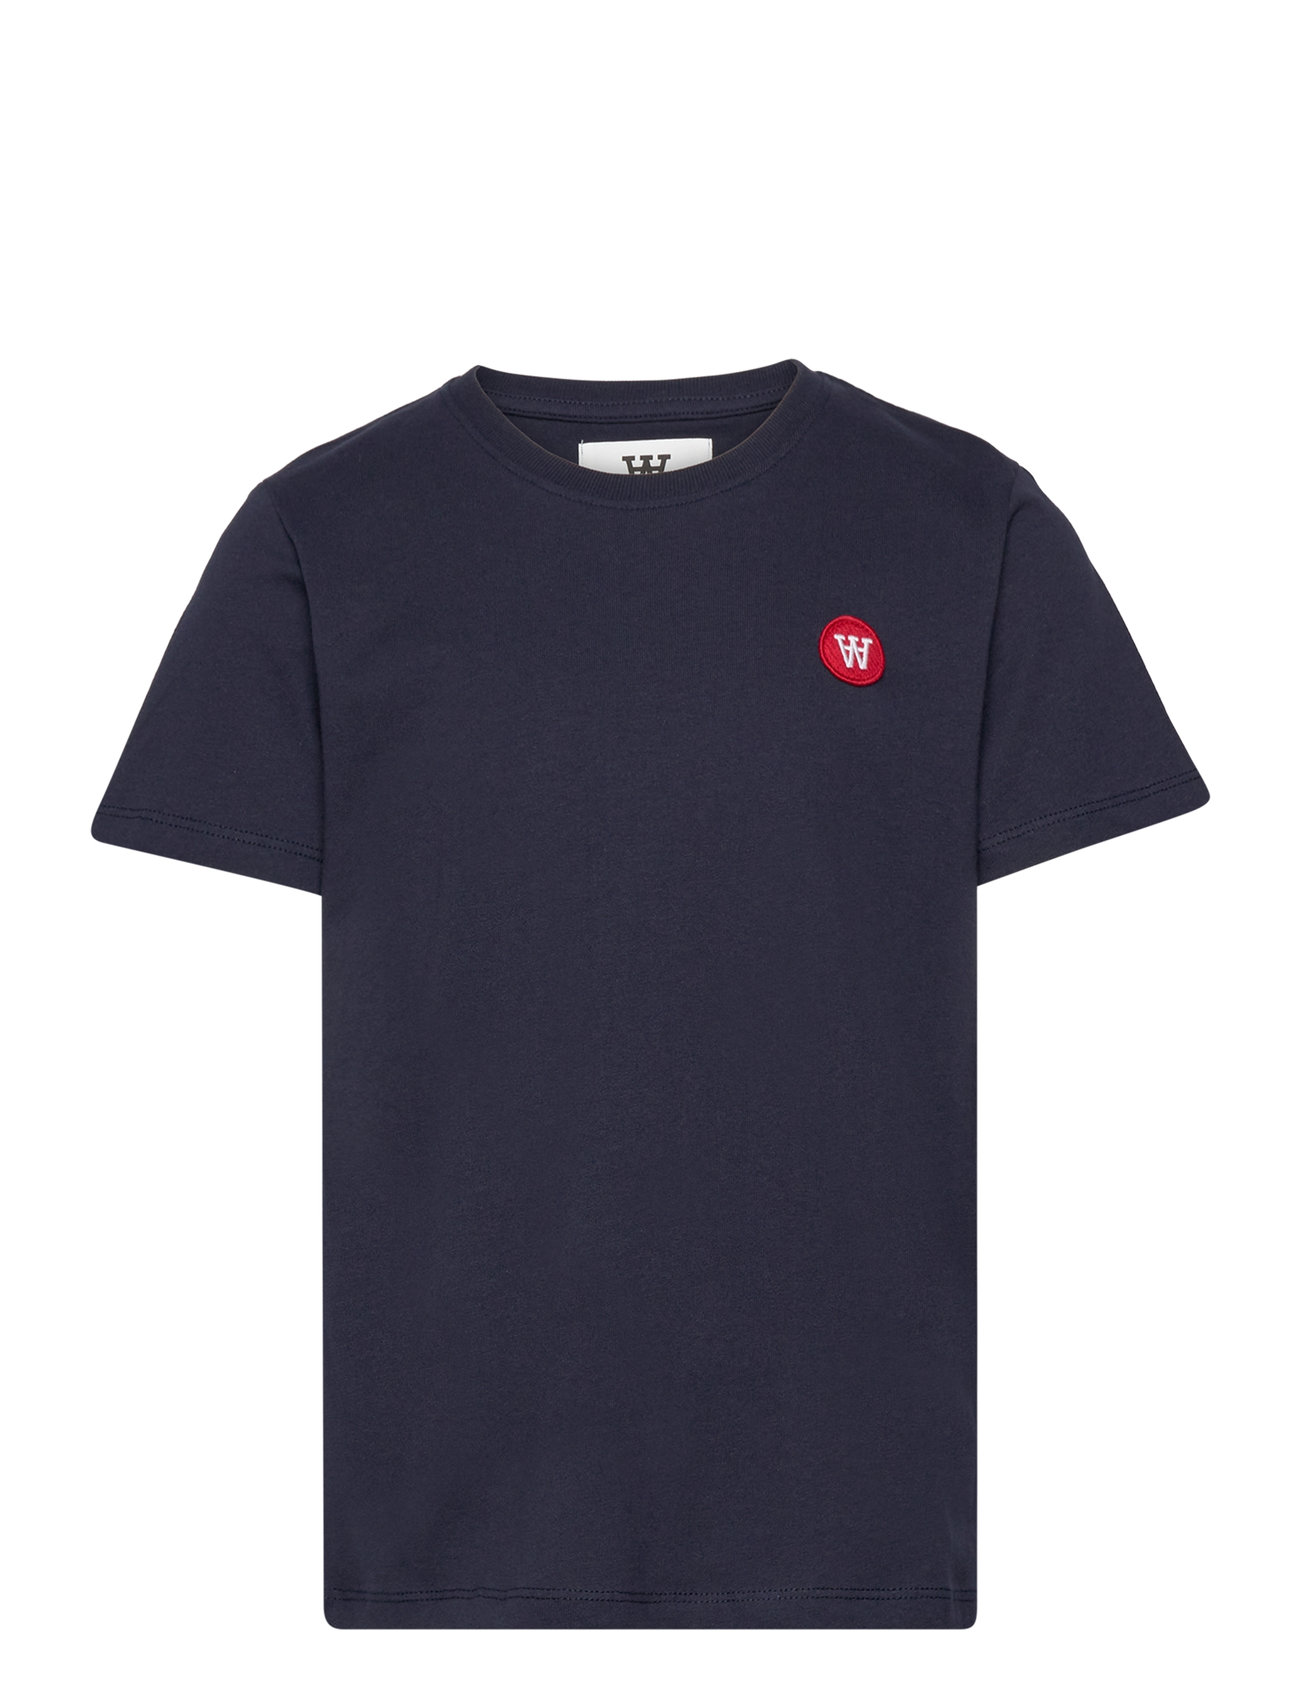 Ola Junior T-Shirt Gots Tops T-Kortærmet Skjorte Navy Double A By Wood Wood